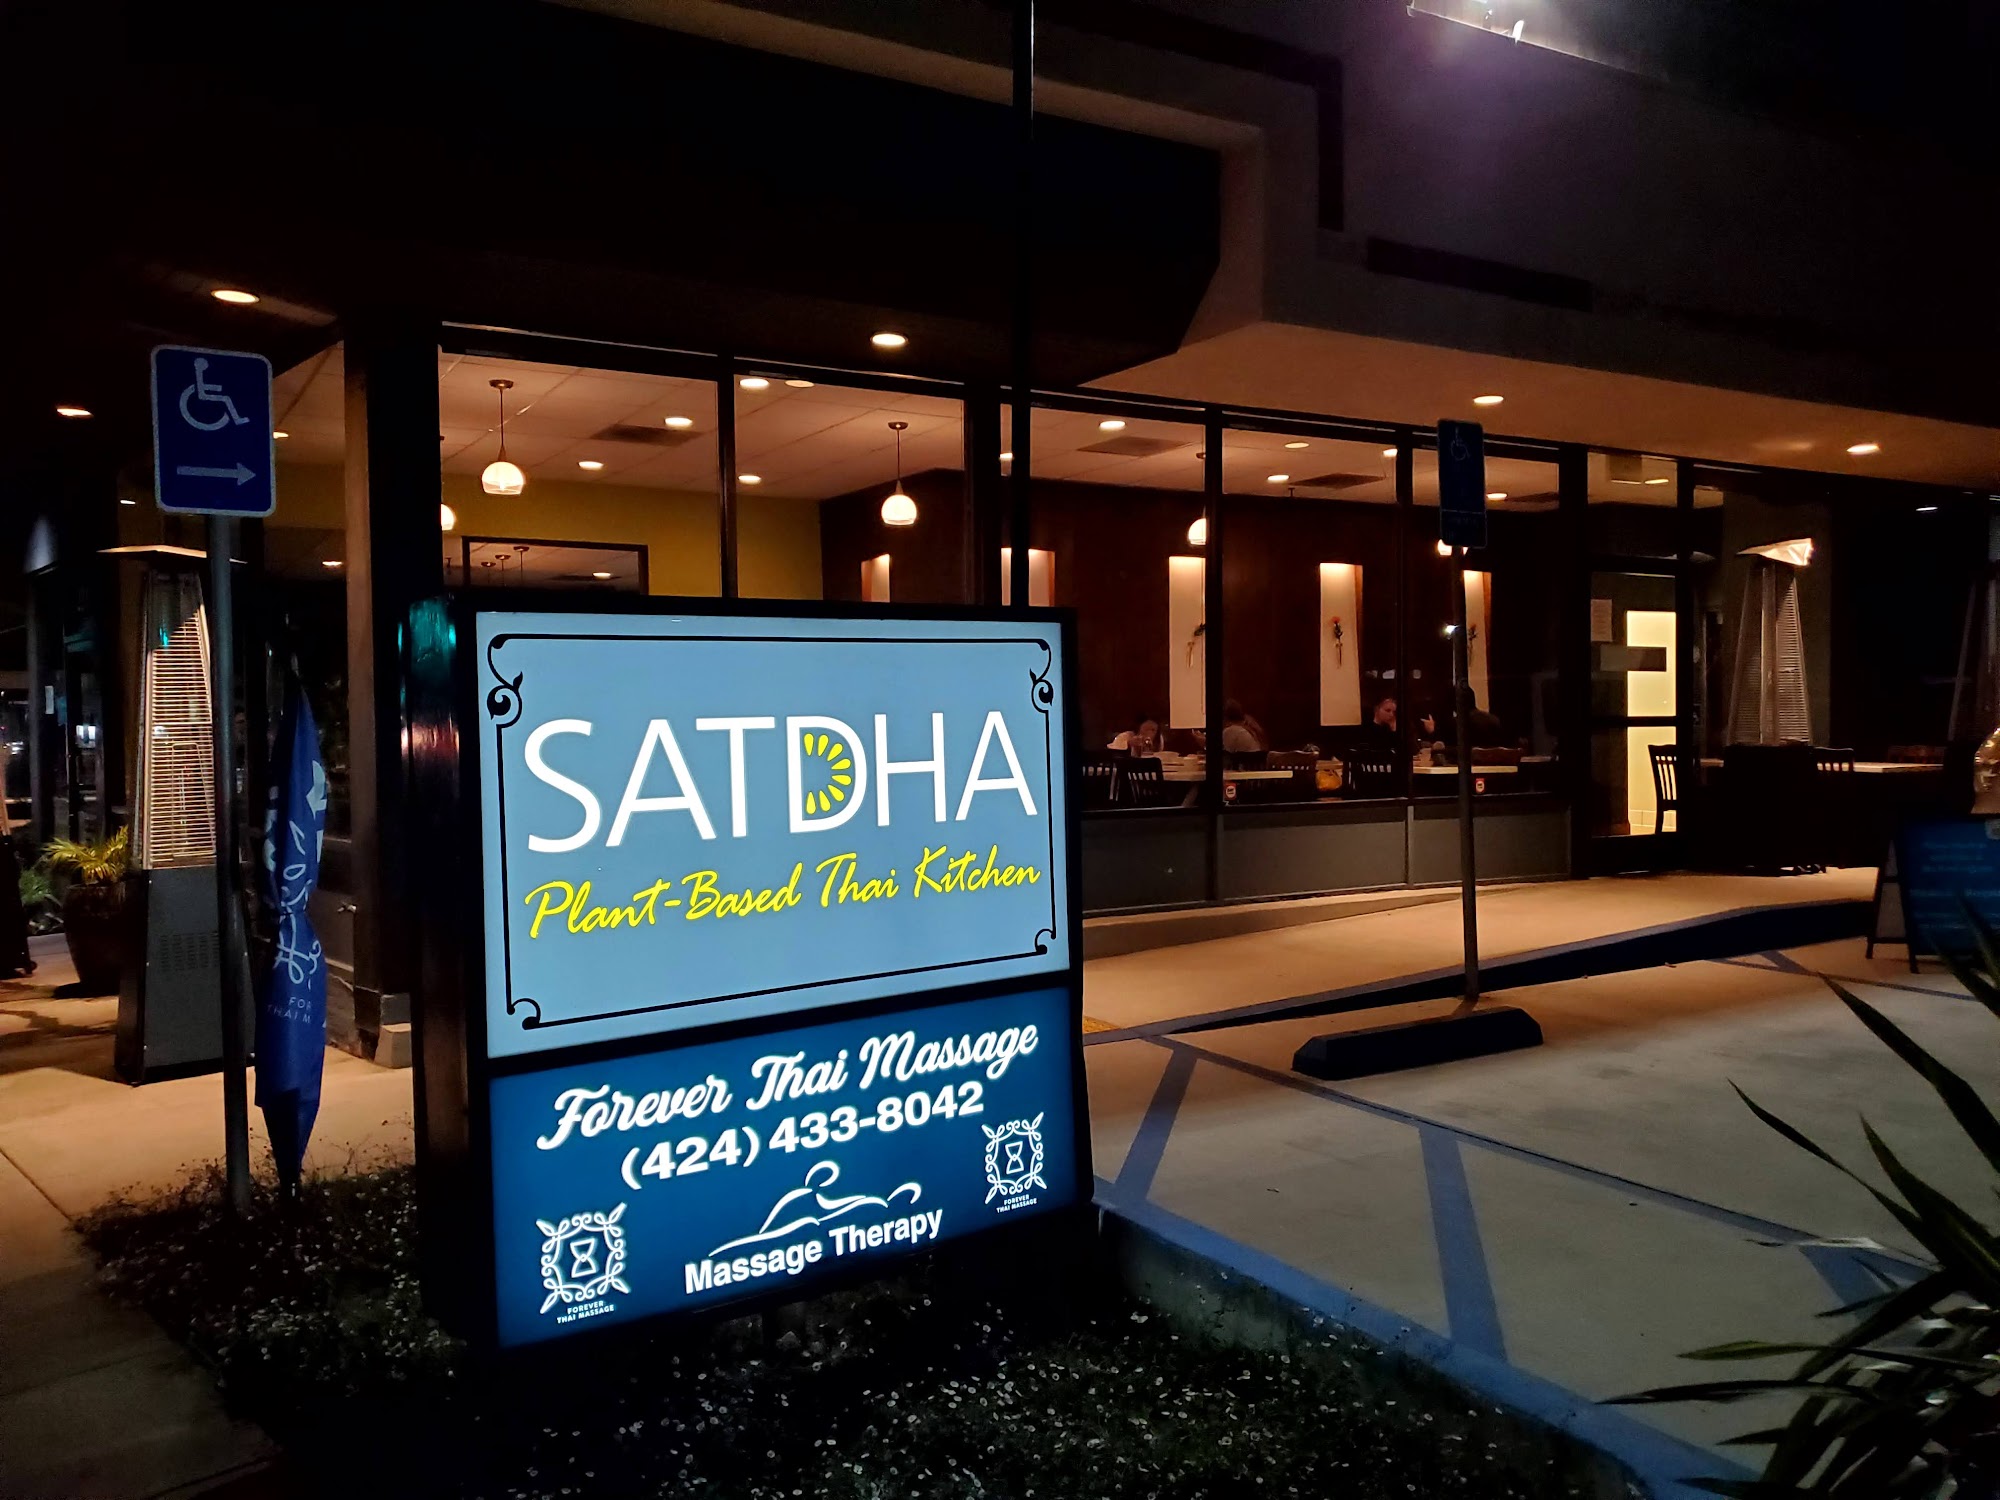 Satdha, Plant Based Thai Kitchen